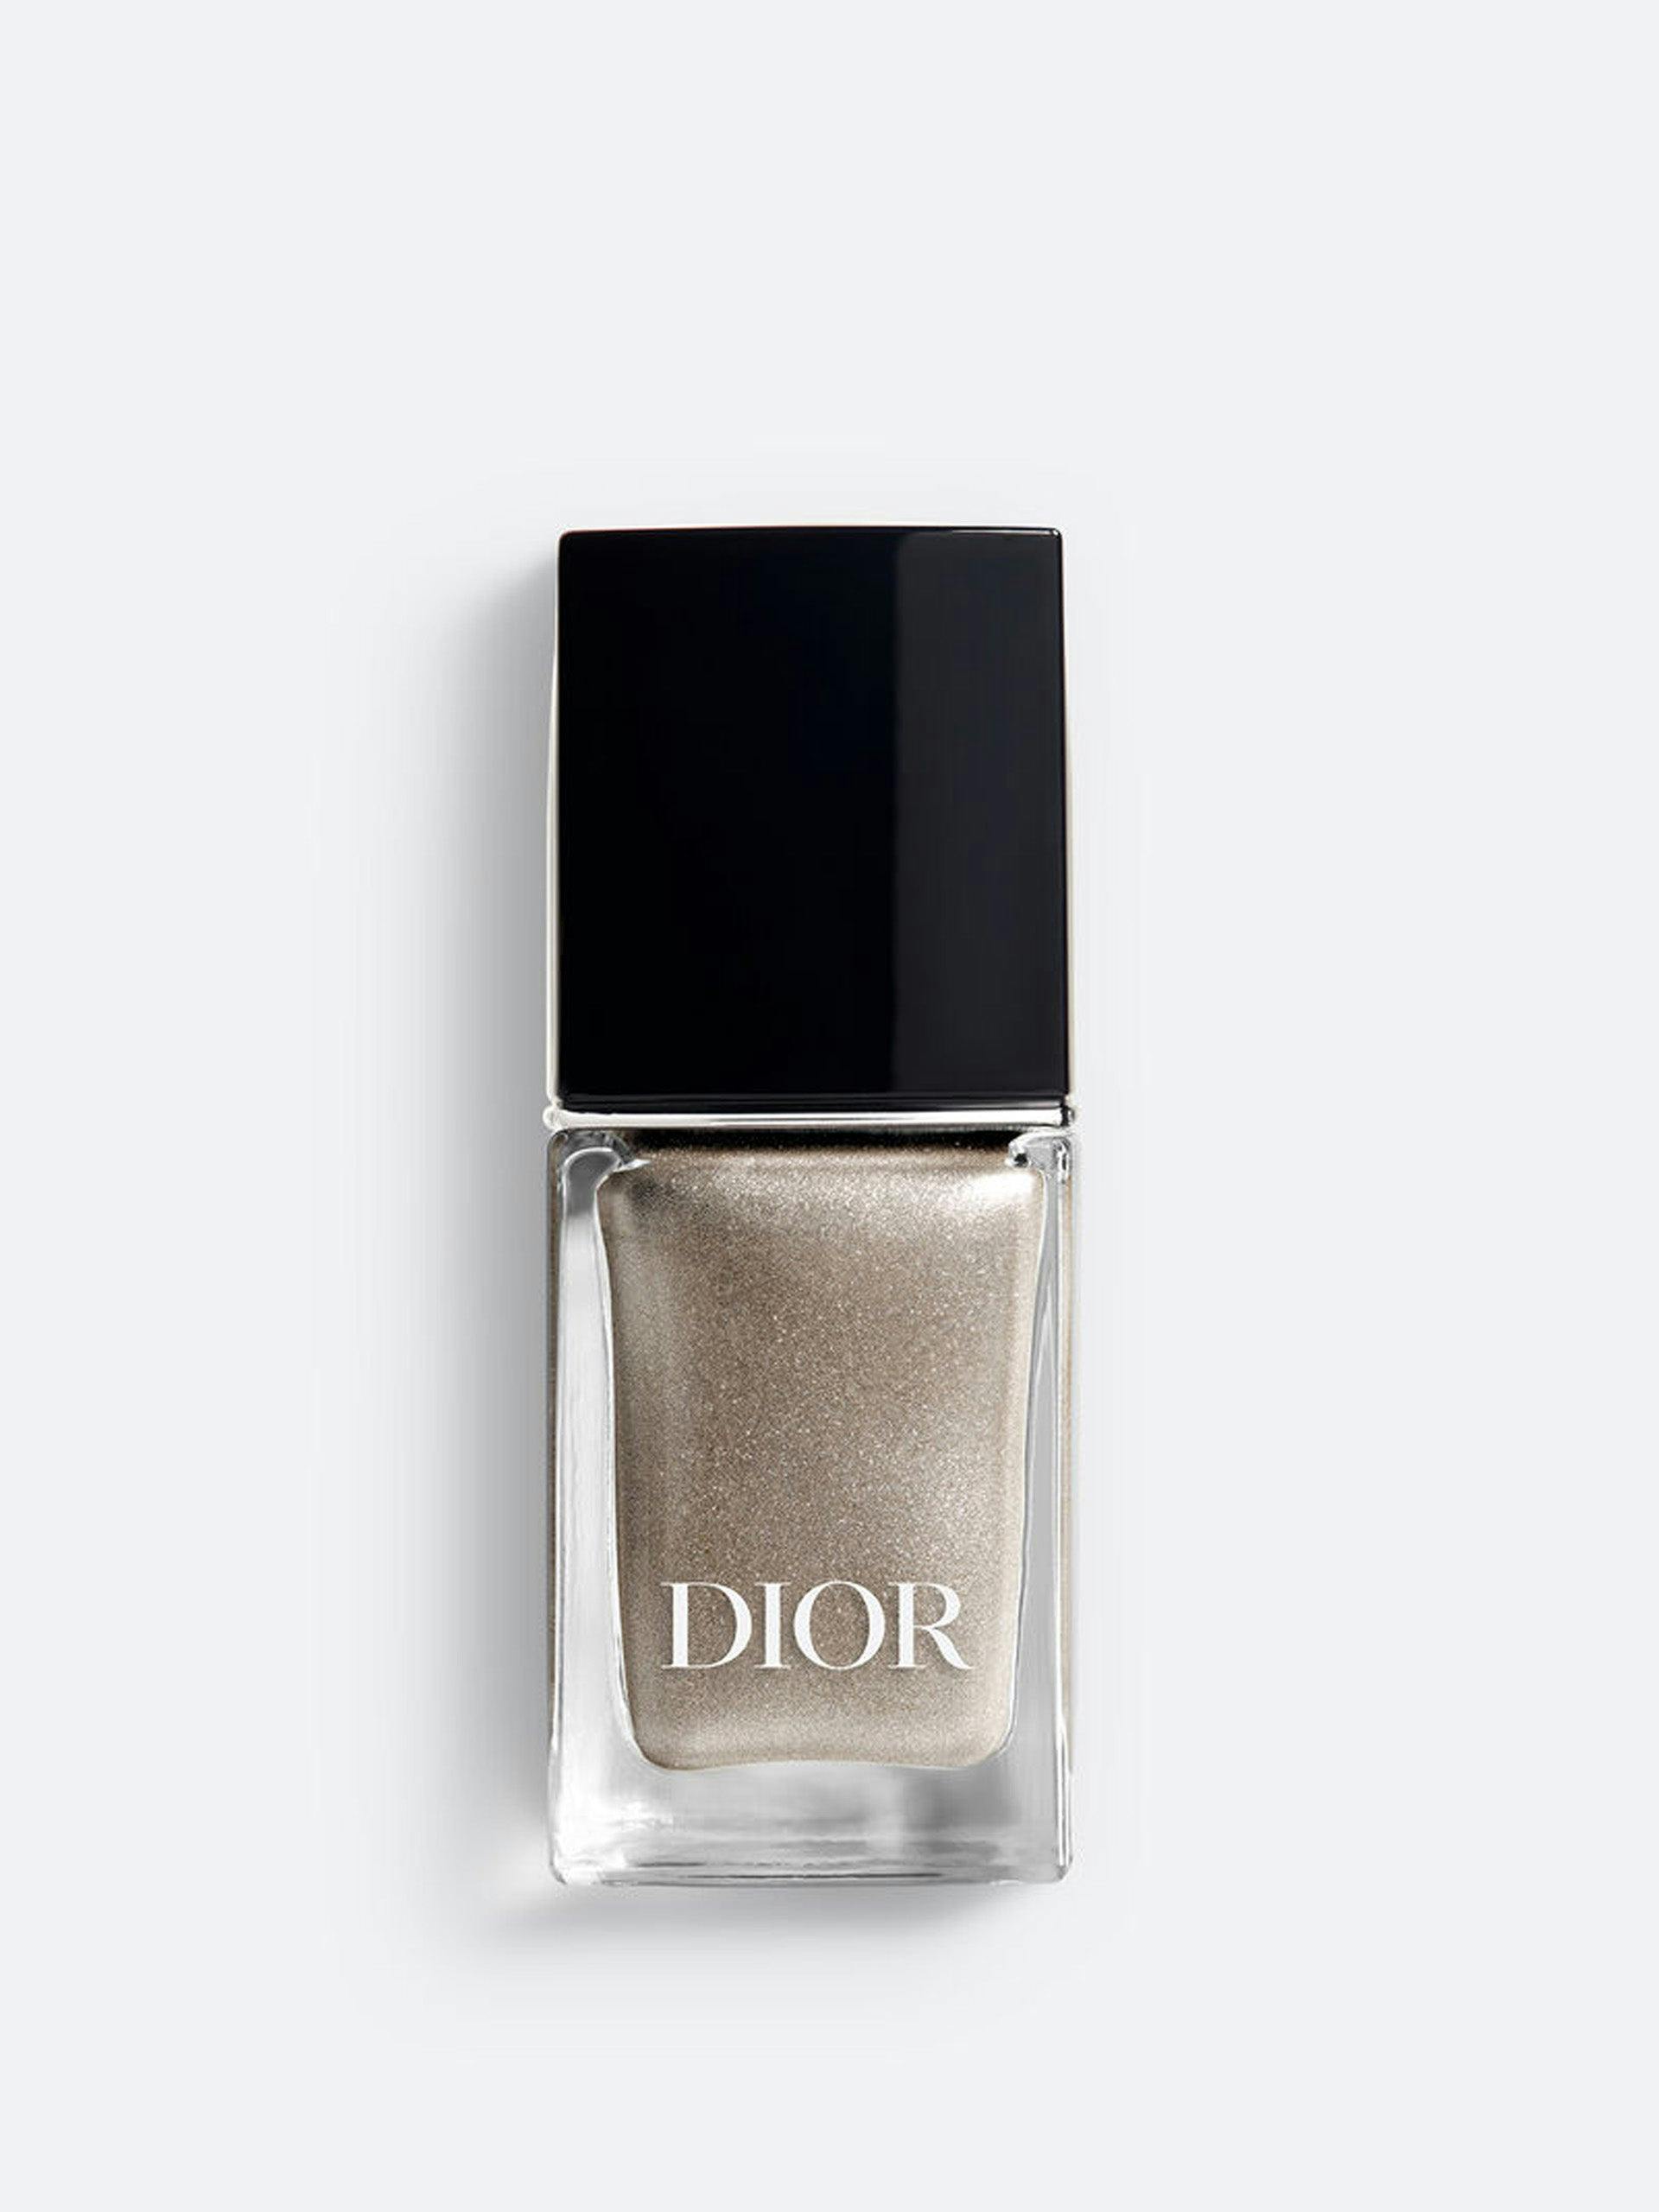 Dior vernis nail polish in Mirror